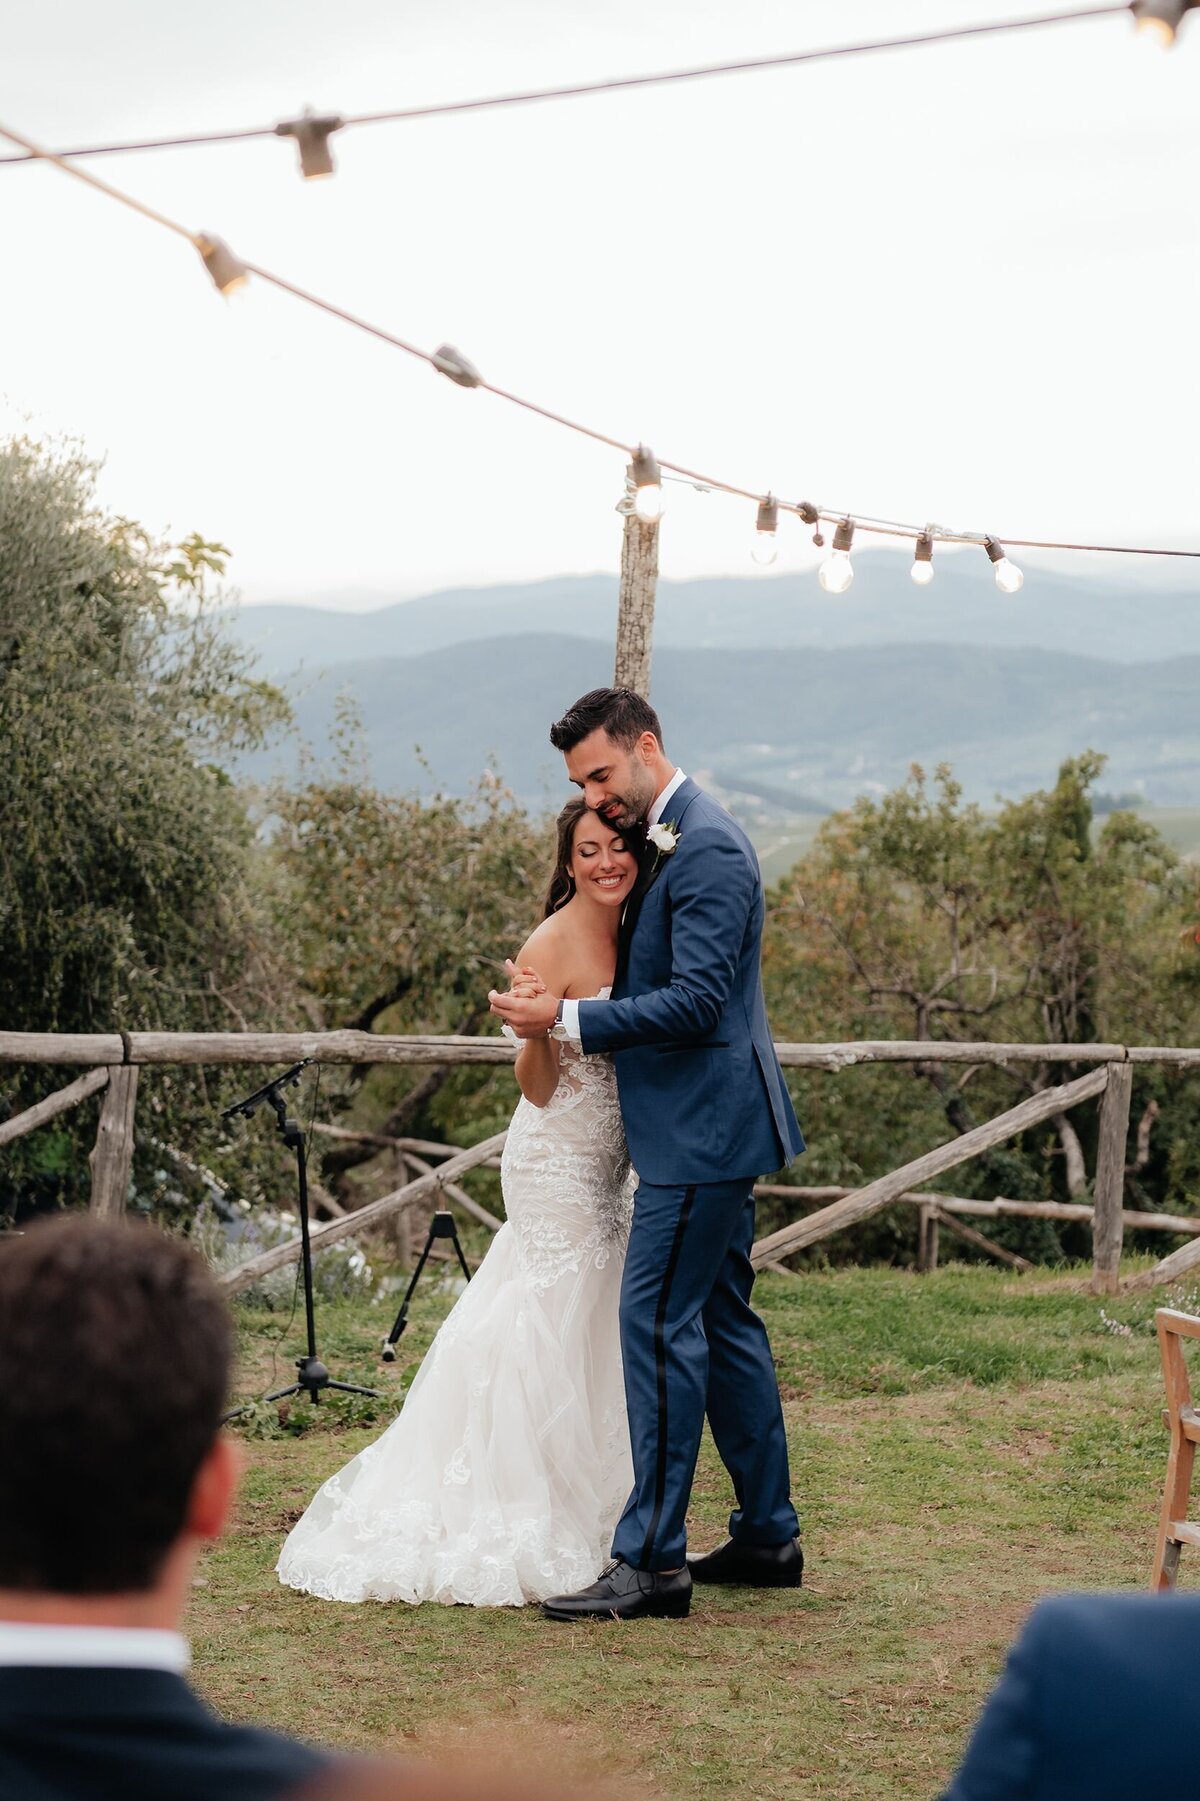 Pete-and-Brenna-Tuscany-Italy-Destination-Wedding-98